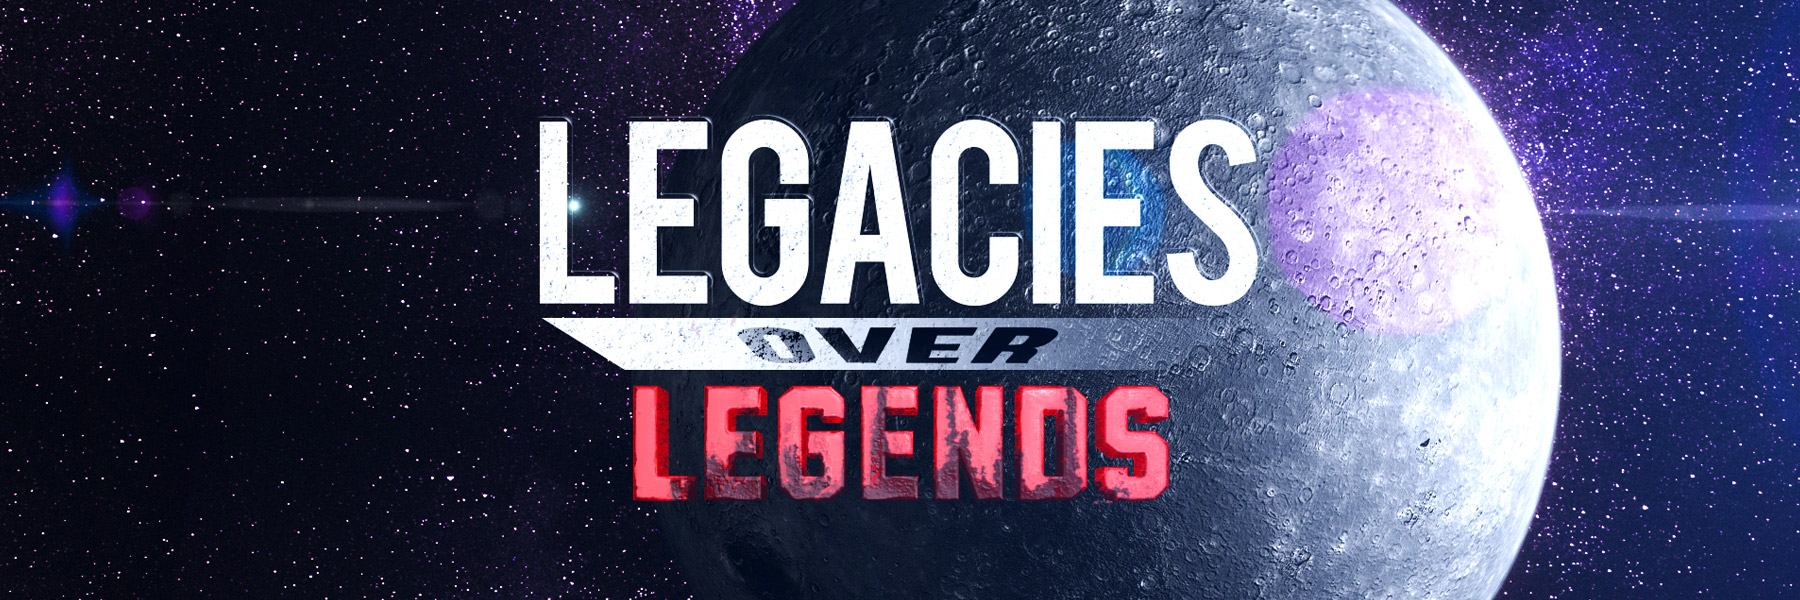 Legacies Over Legends